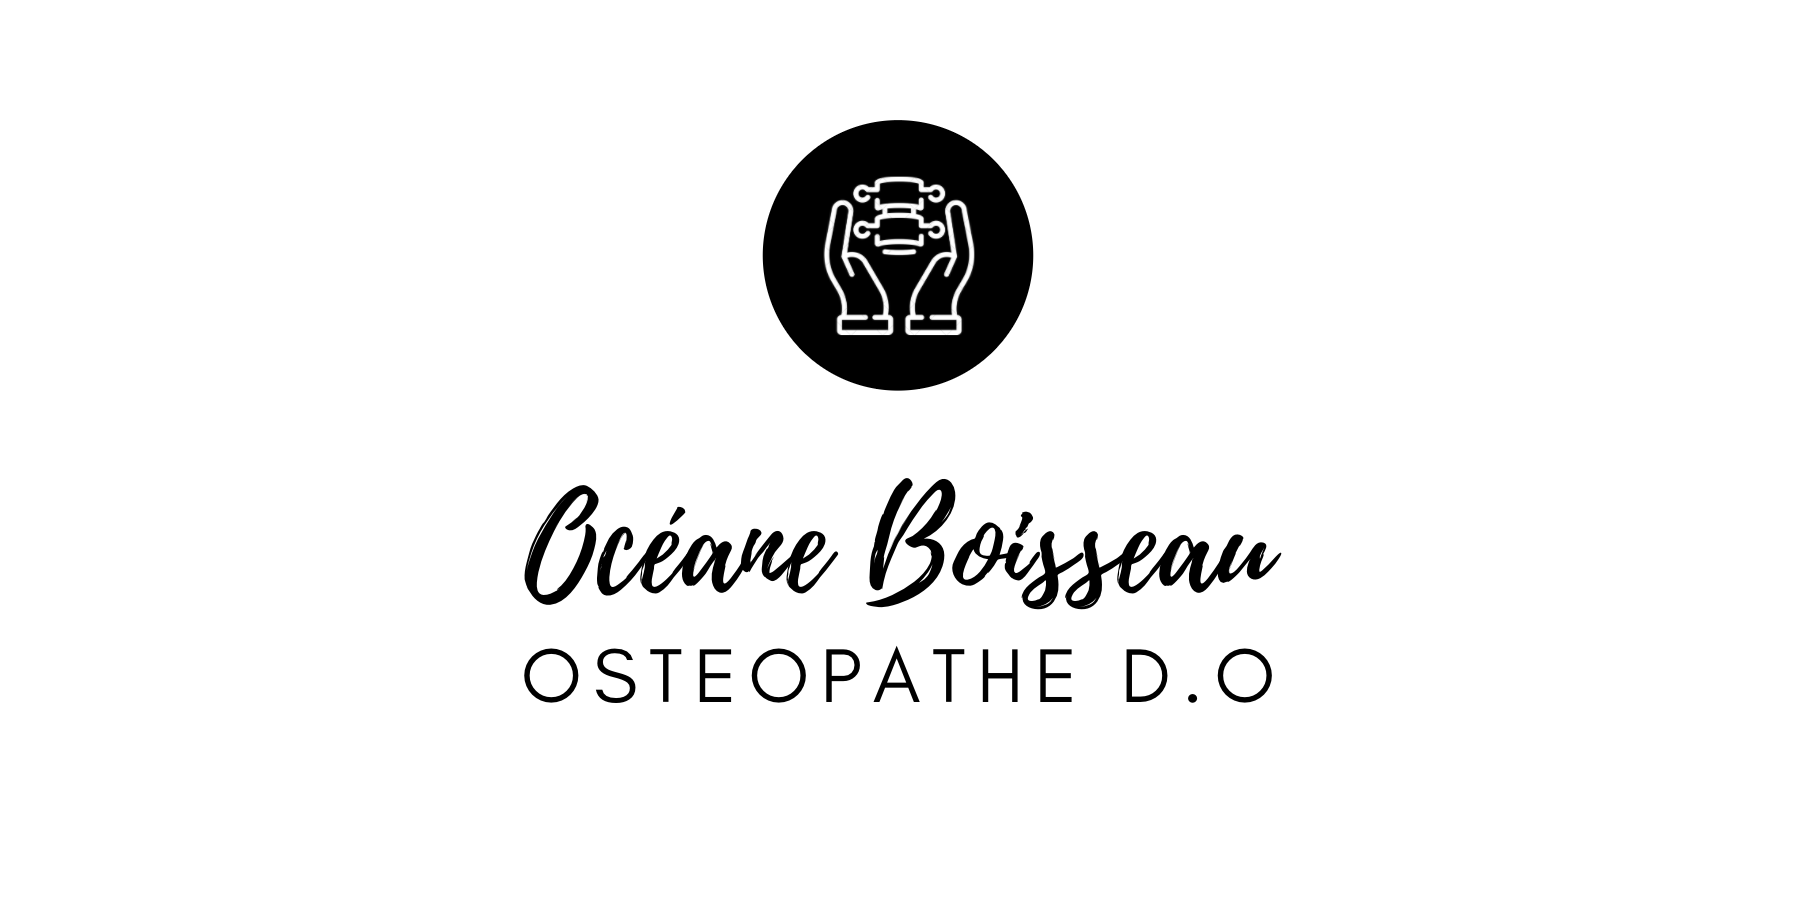 océane boisseau osteopathe